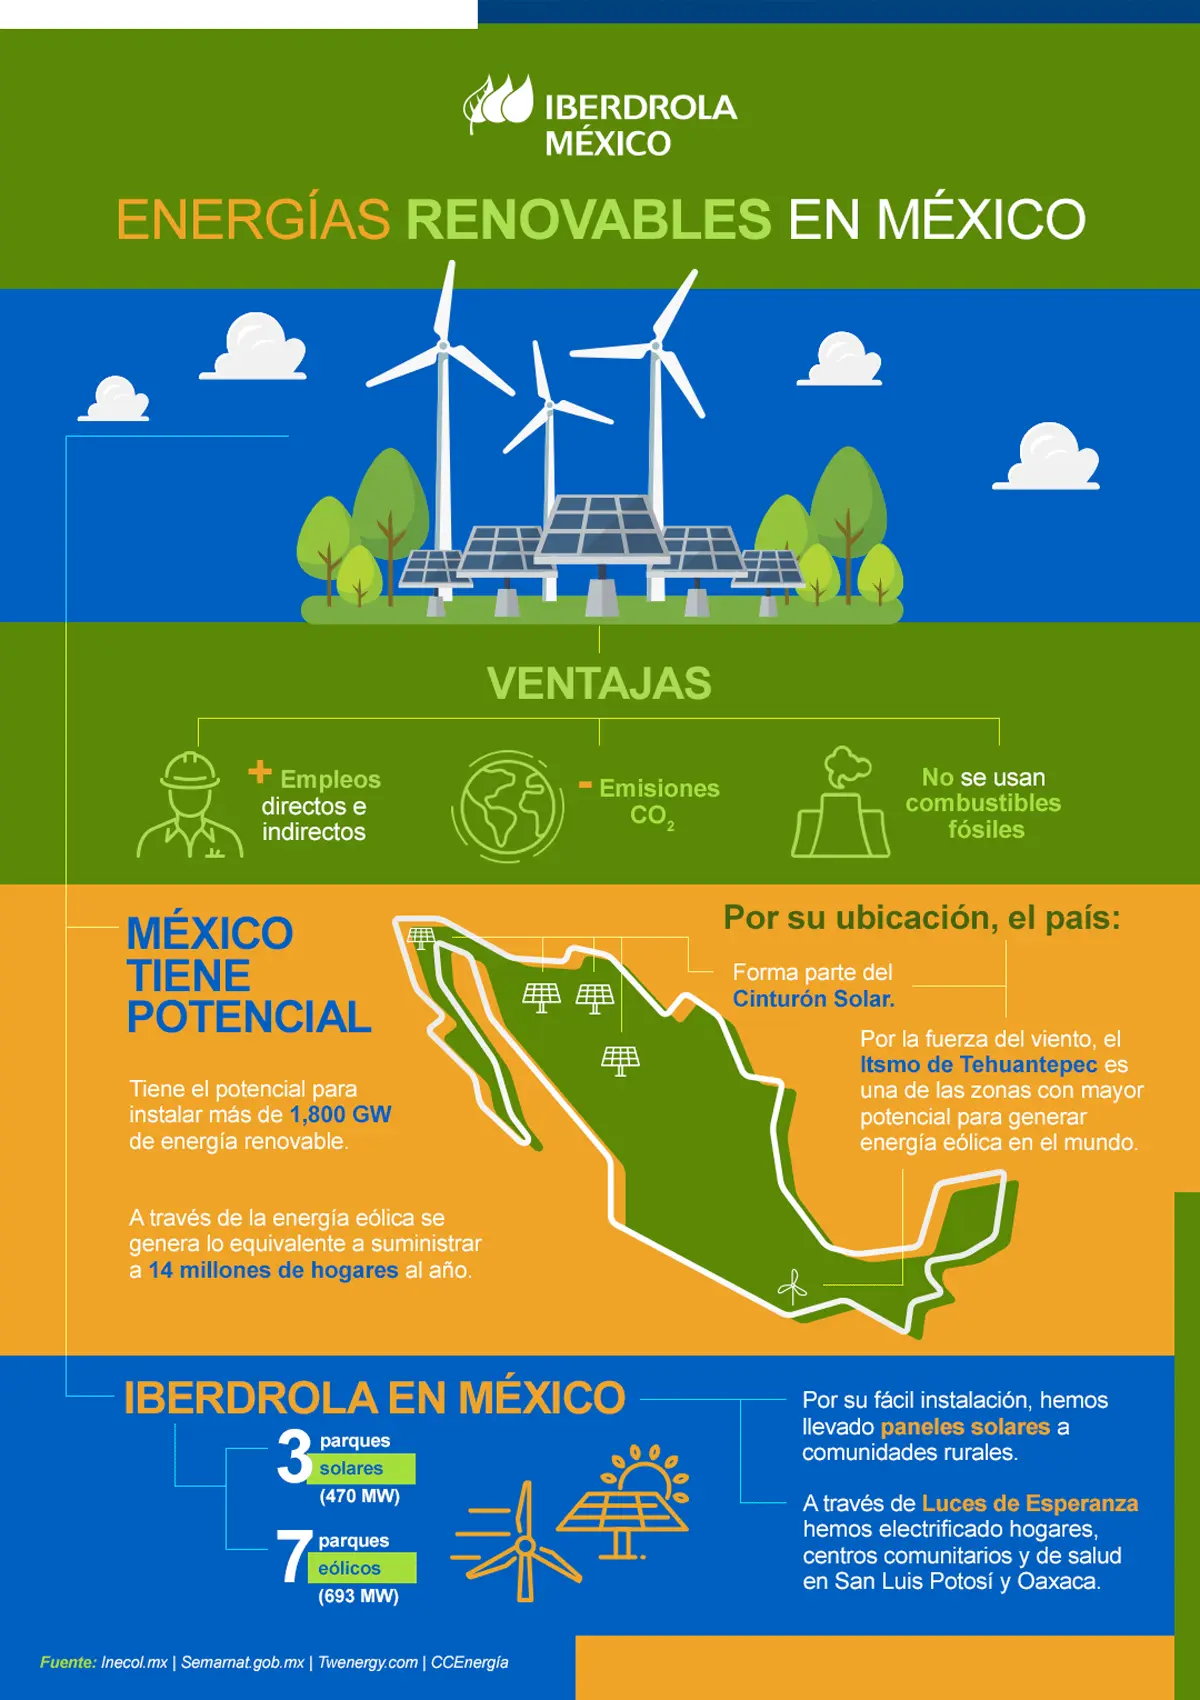 proyectos de energía renovable en méxico - Qué viabilidad tiene la energía renovable en México